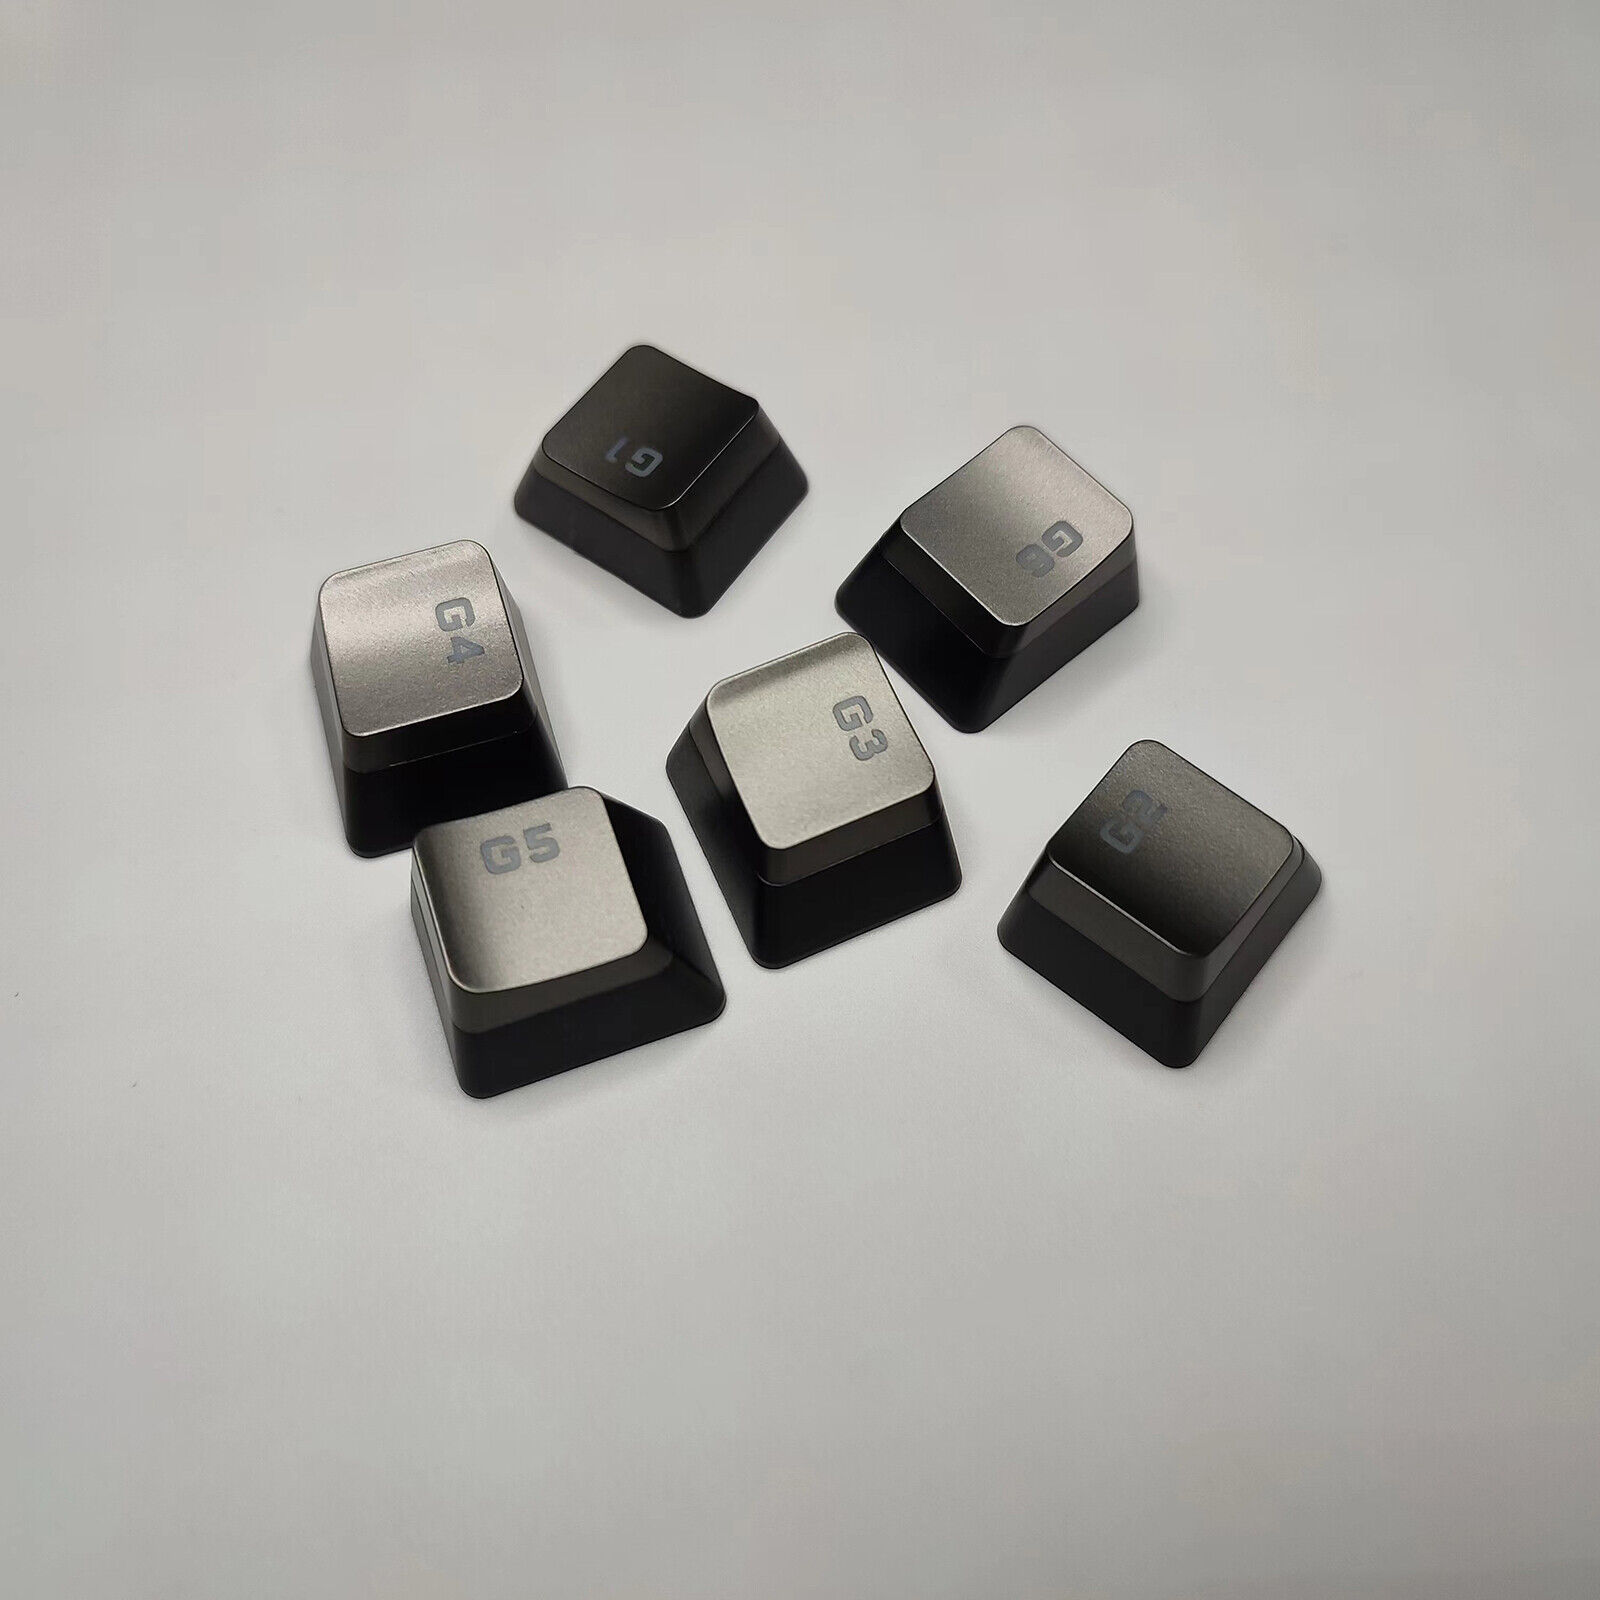 For Corsair K100 Keyboard Keycaps G1-G6 Key Cap